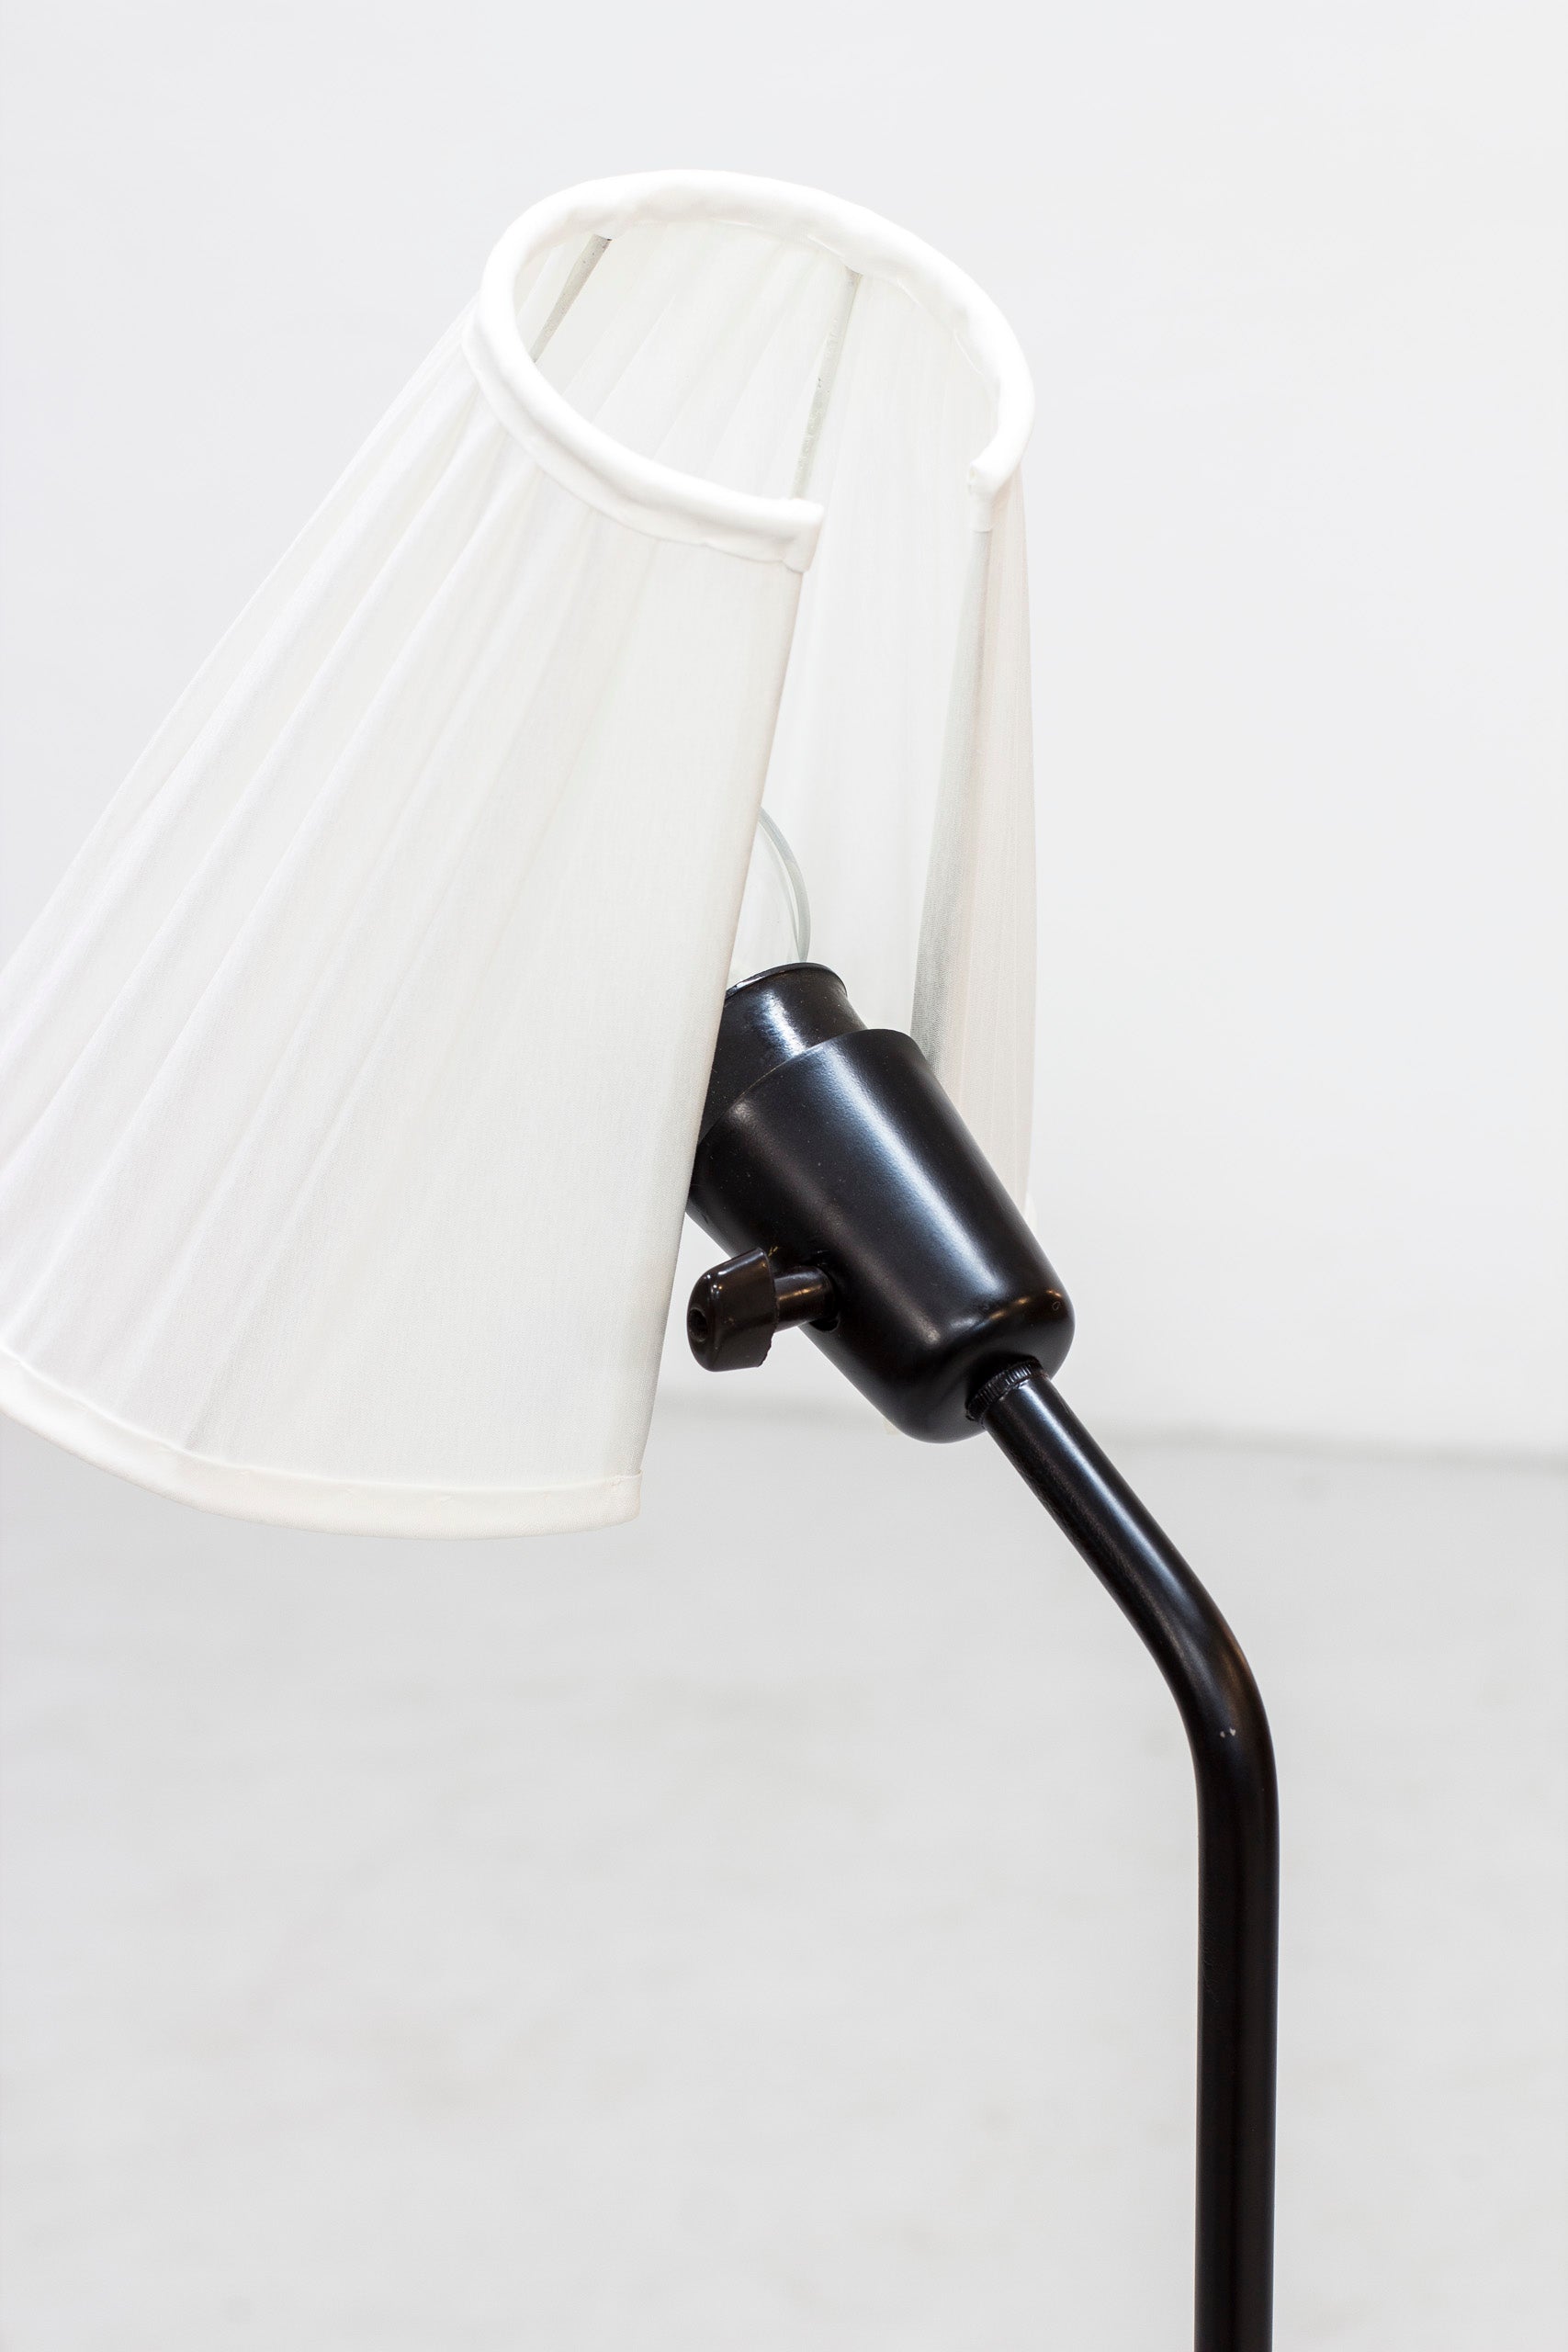 Swedish floor lamp by Luco